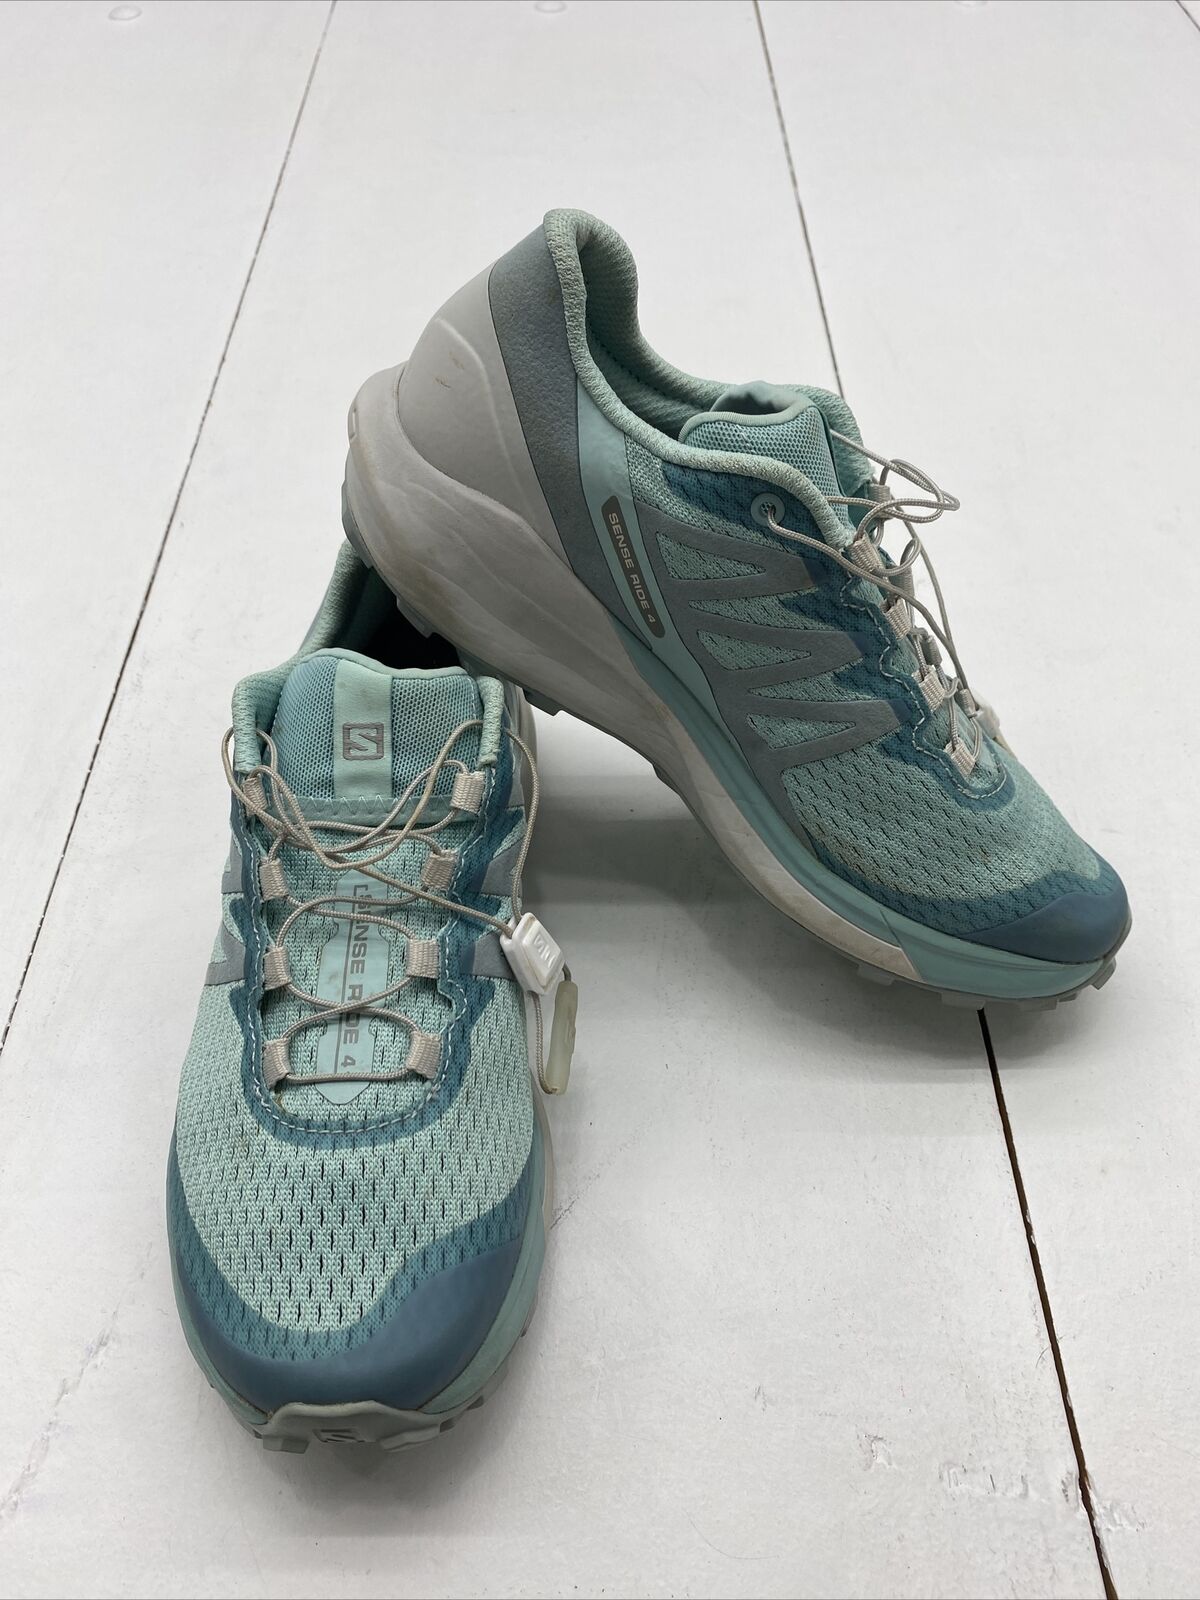 Women's Running Shoes - Shop Salomon